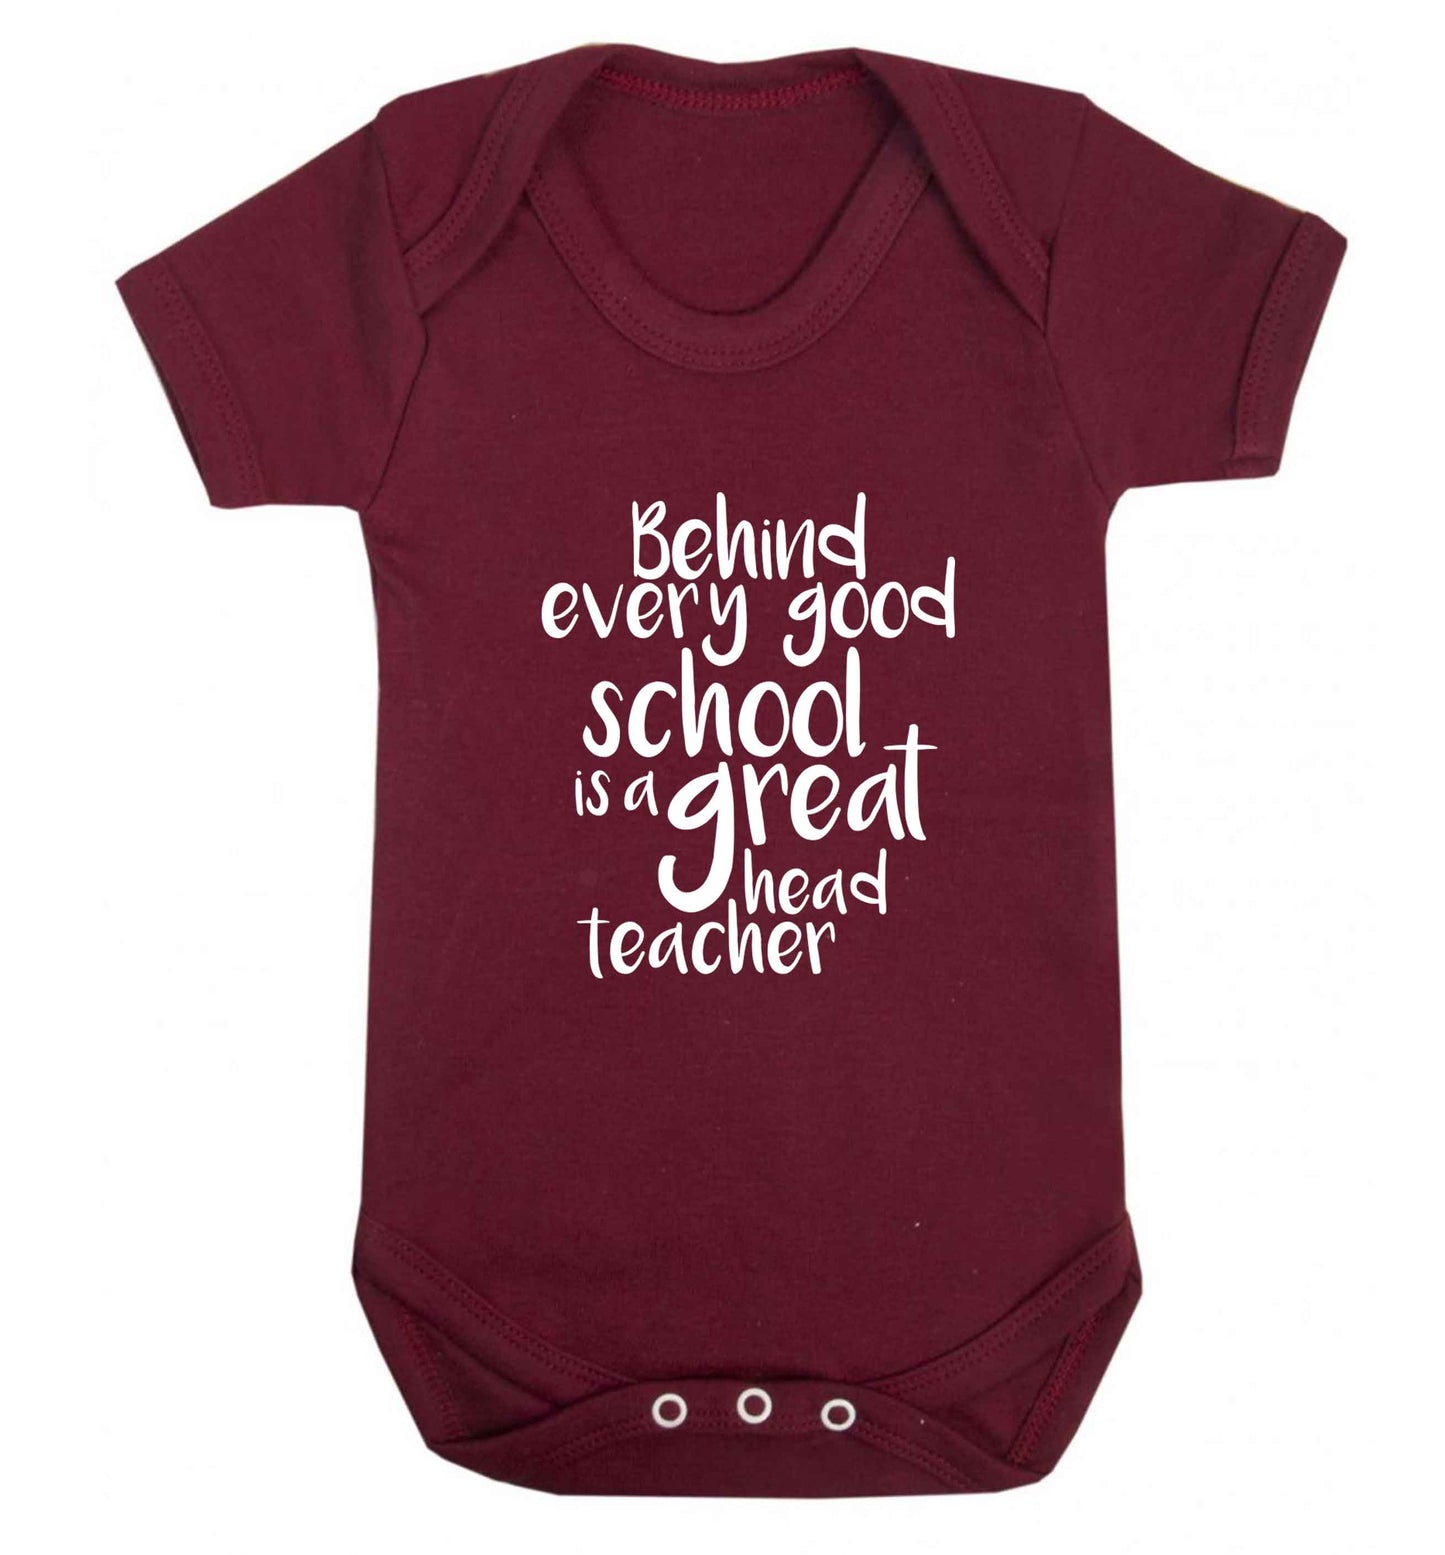 Behind every good school is a great head teacher baby vest maroon 18-24 months